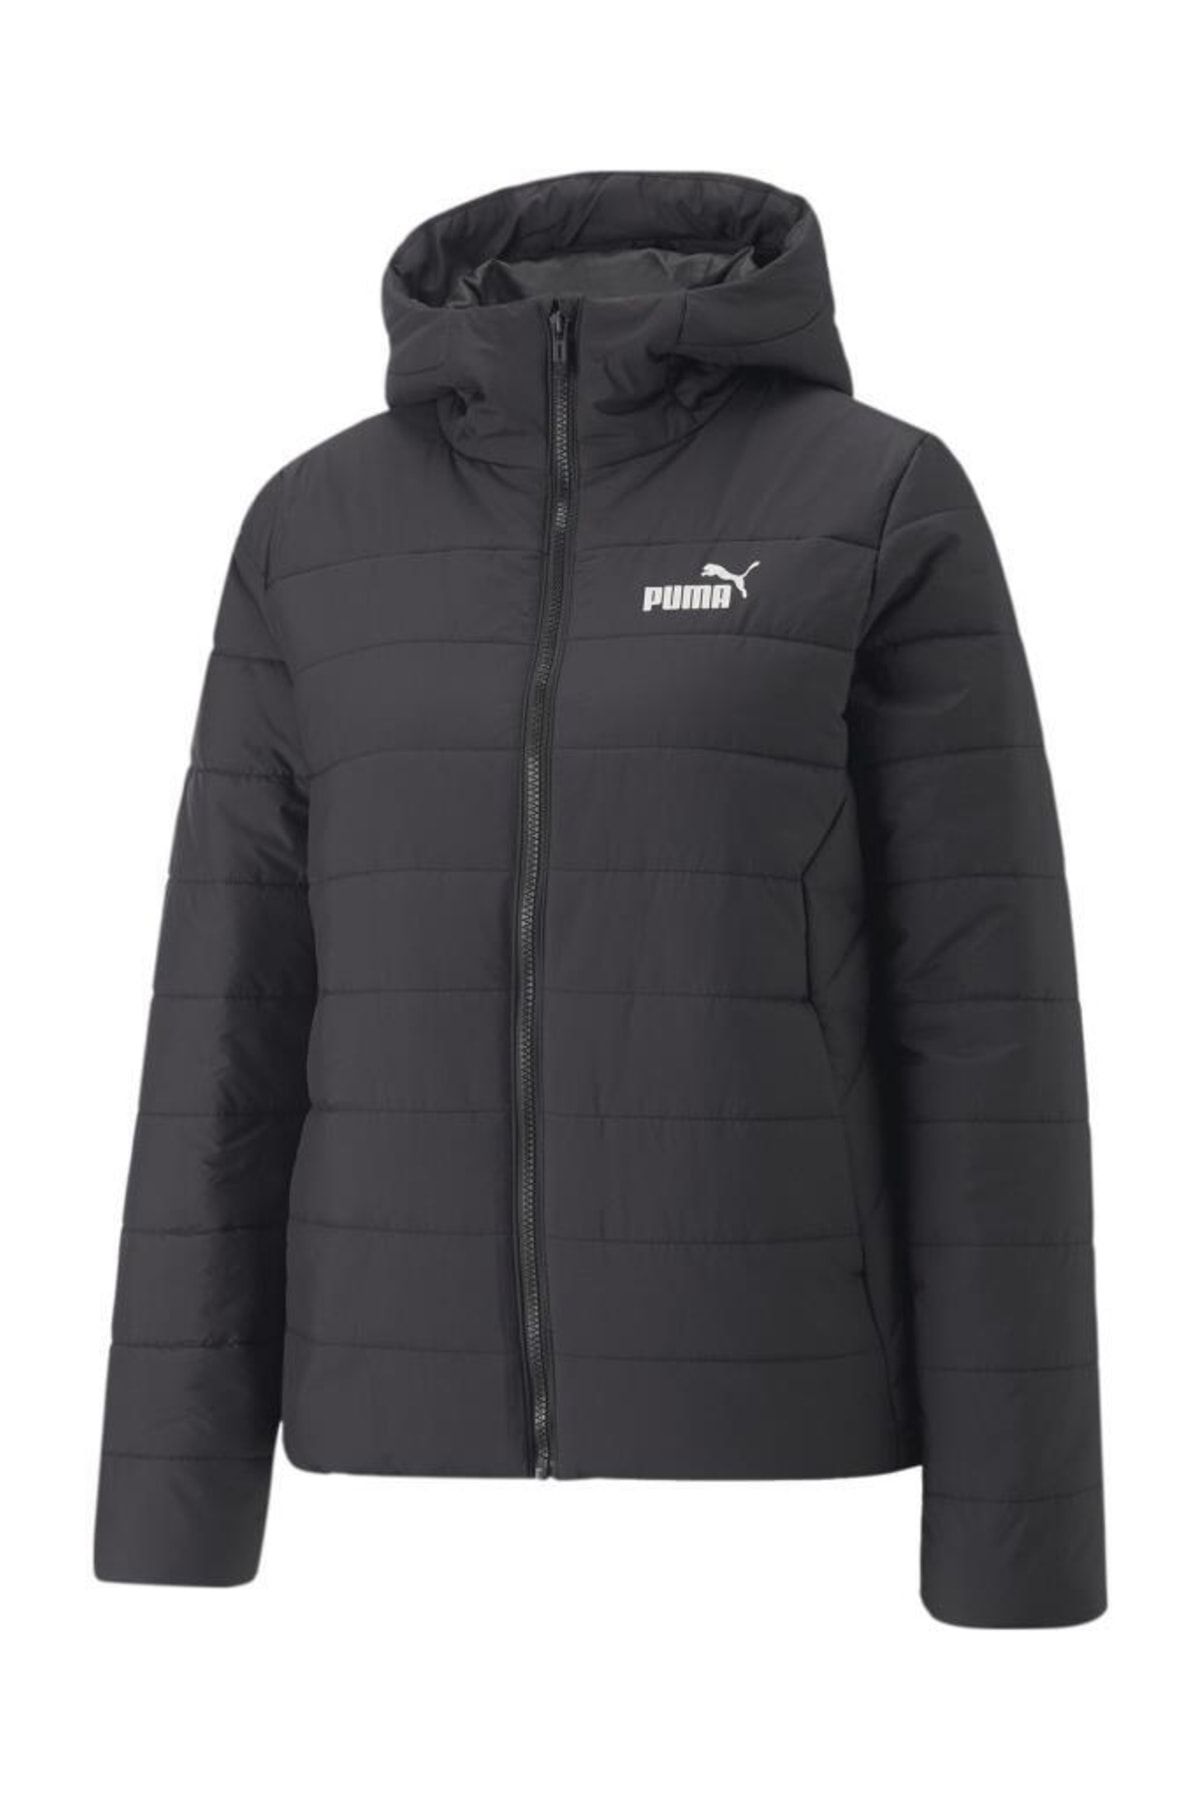 Puma Kadın / Kız Spor Mont - Ess Hooded Padded Jacket Black - 84894001